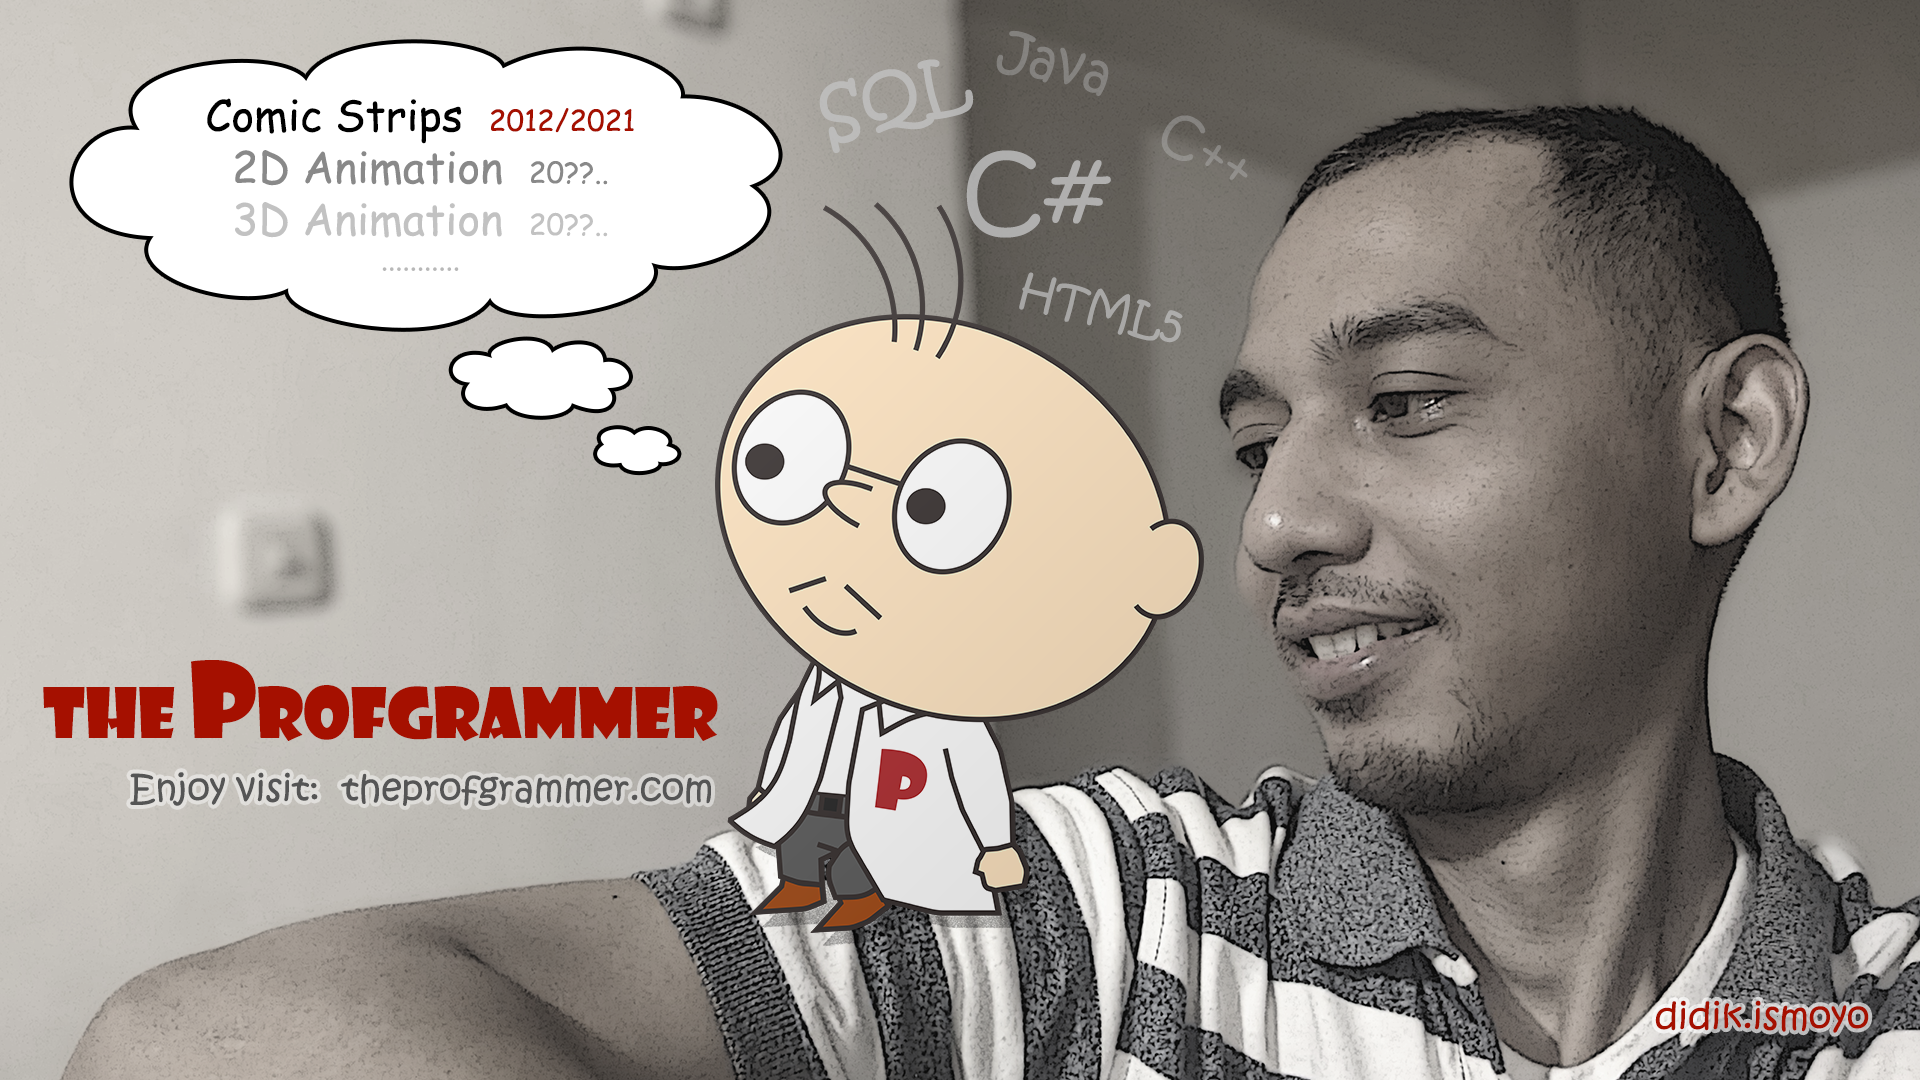 Animation Test: Prof. Grammer - The Profgrammer